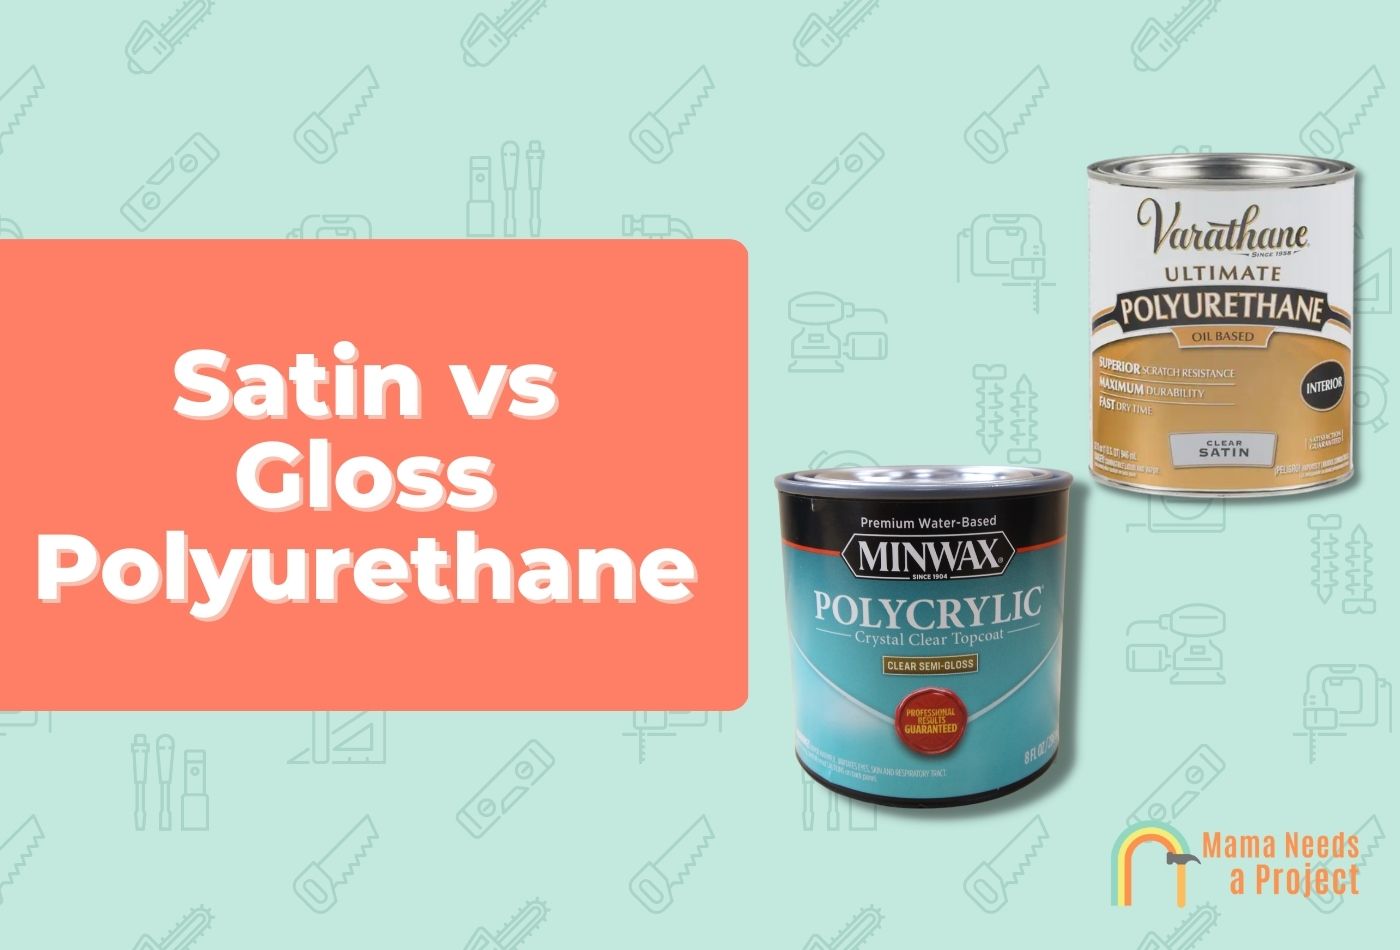 Satin vs Gloss Polyurethane